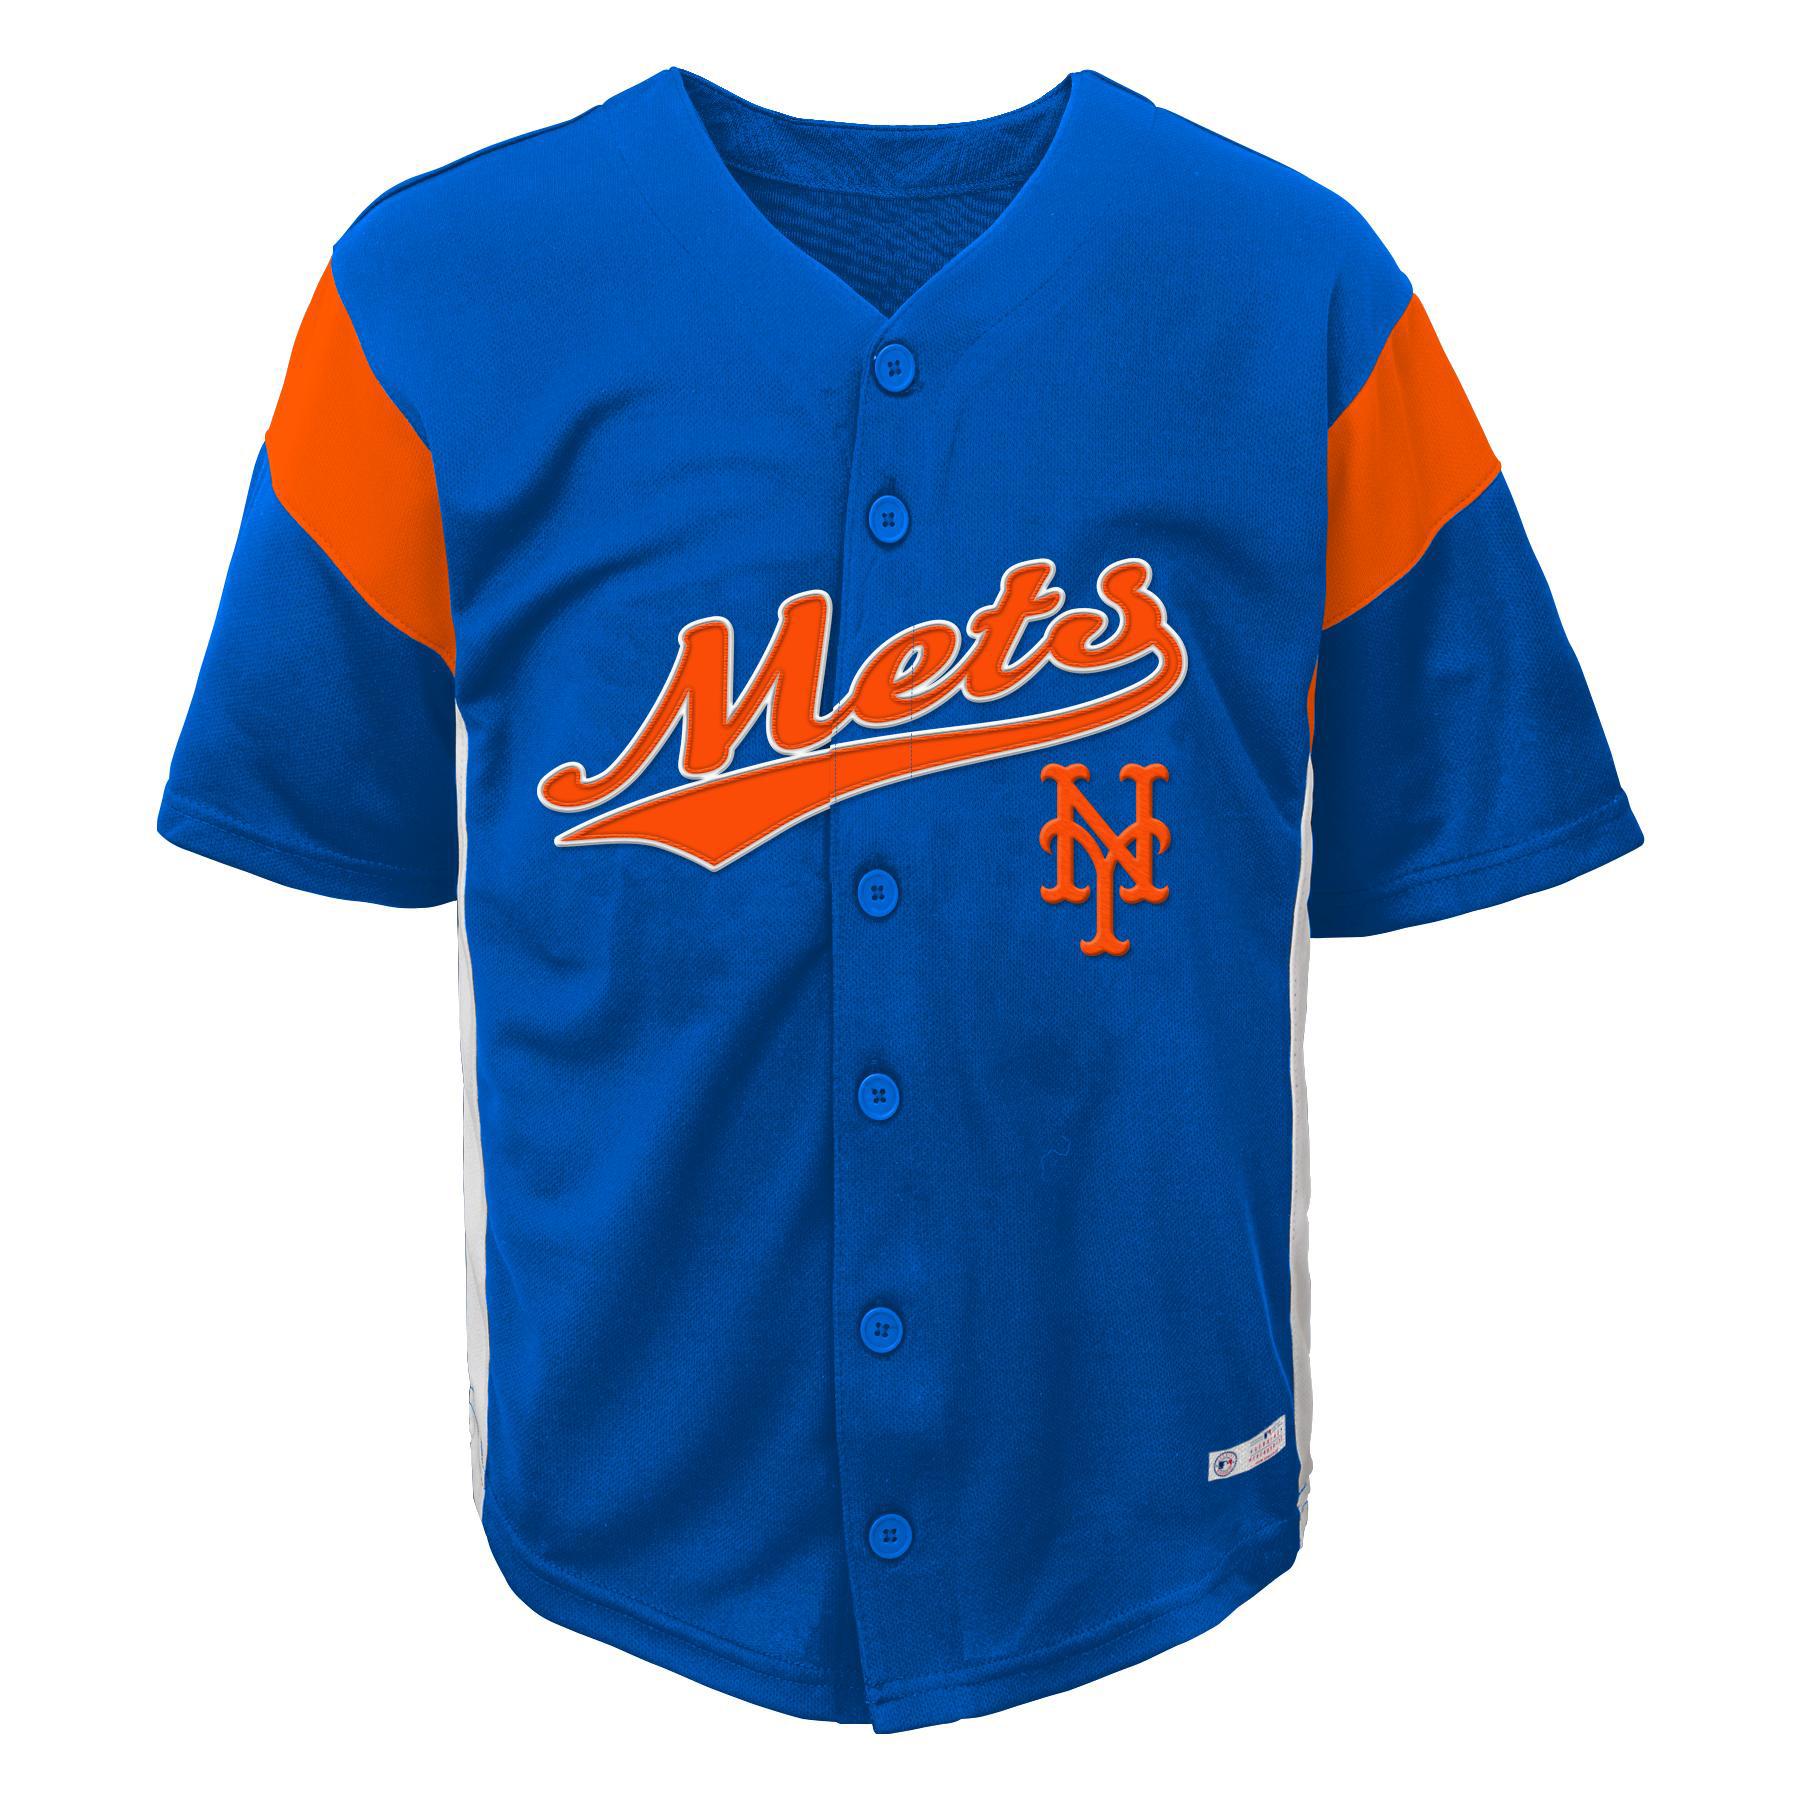 MLB Boy's Baseball Jersey - New York Mets | Shop Your Way ...